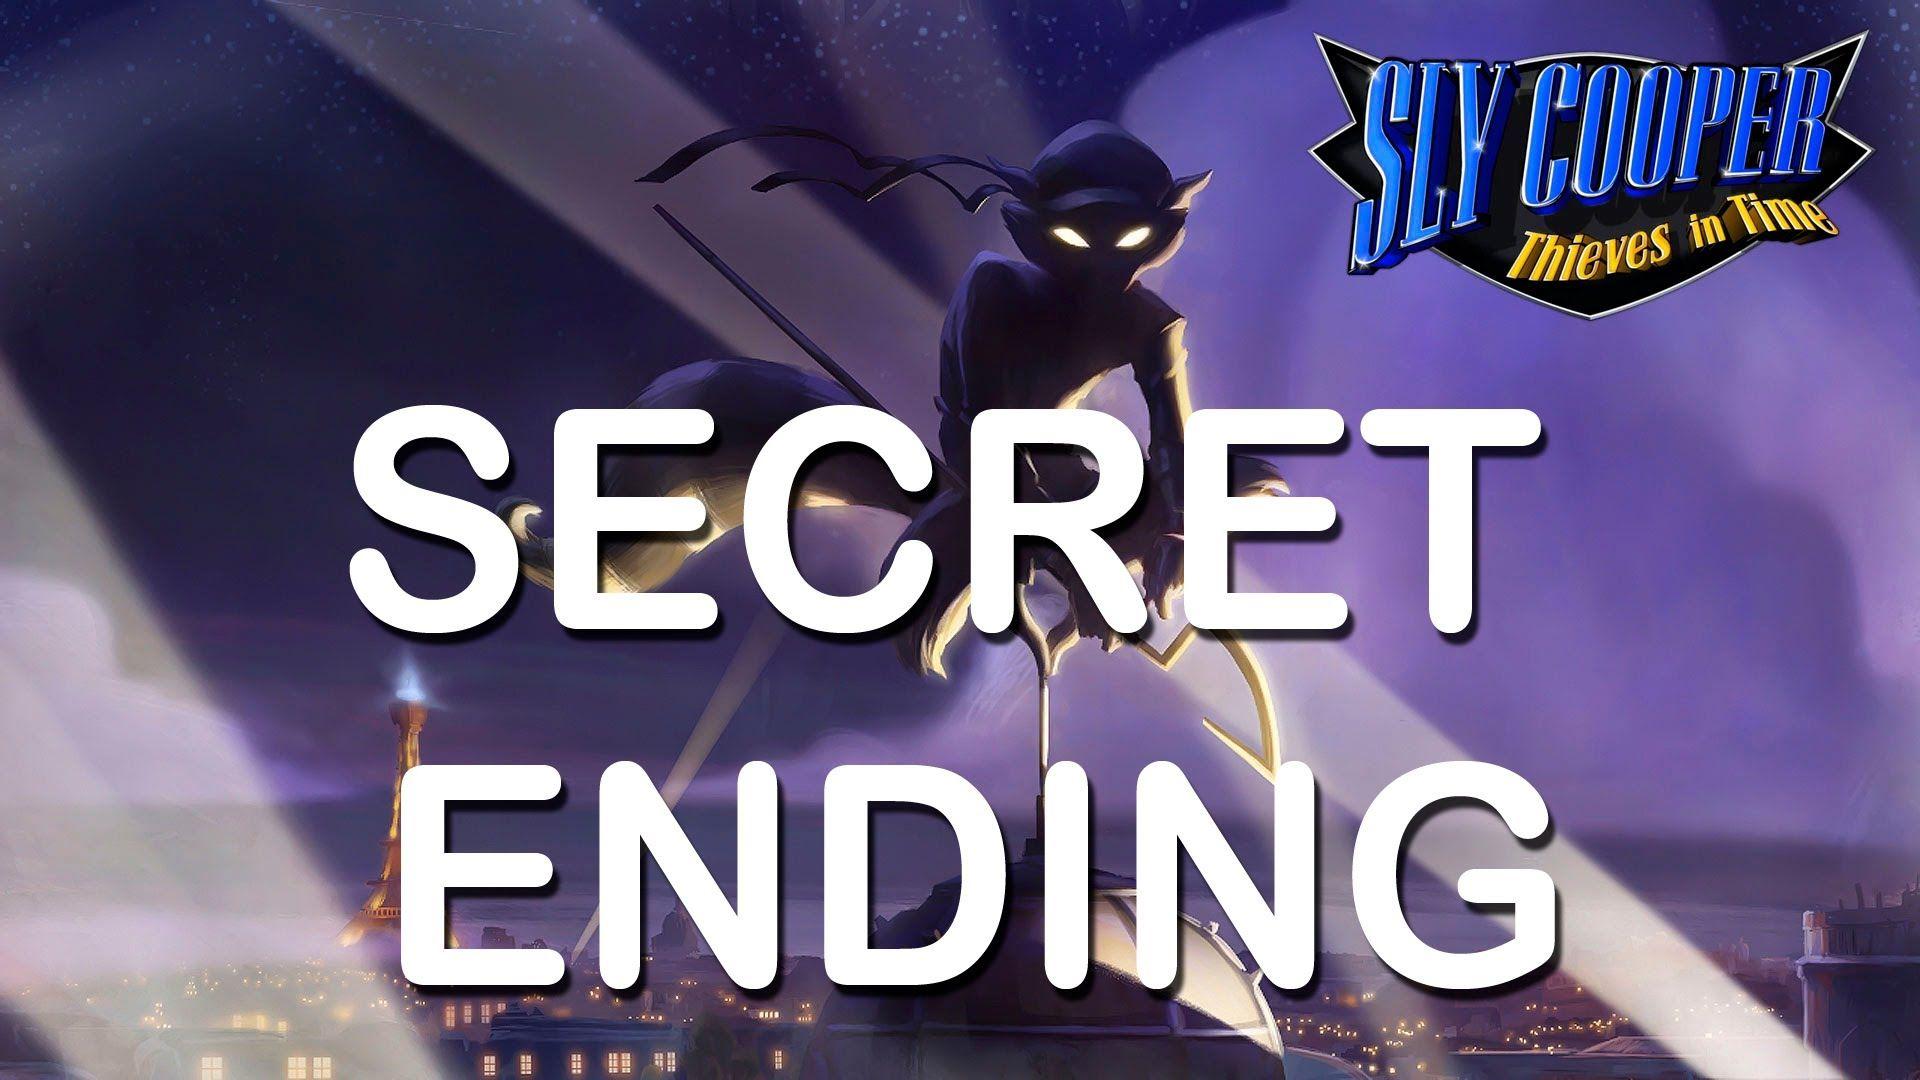 Sly Cooper Thieves in time Secret Ending Sly Cooper 4 secret ending